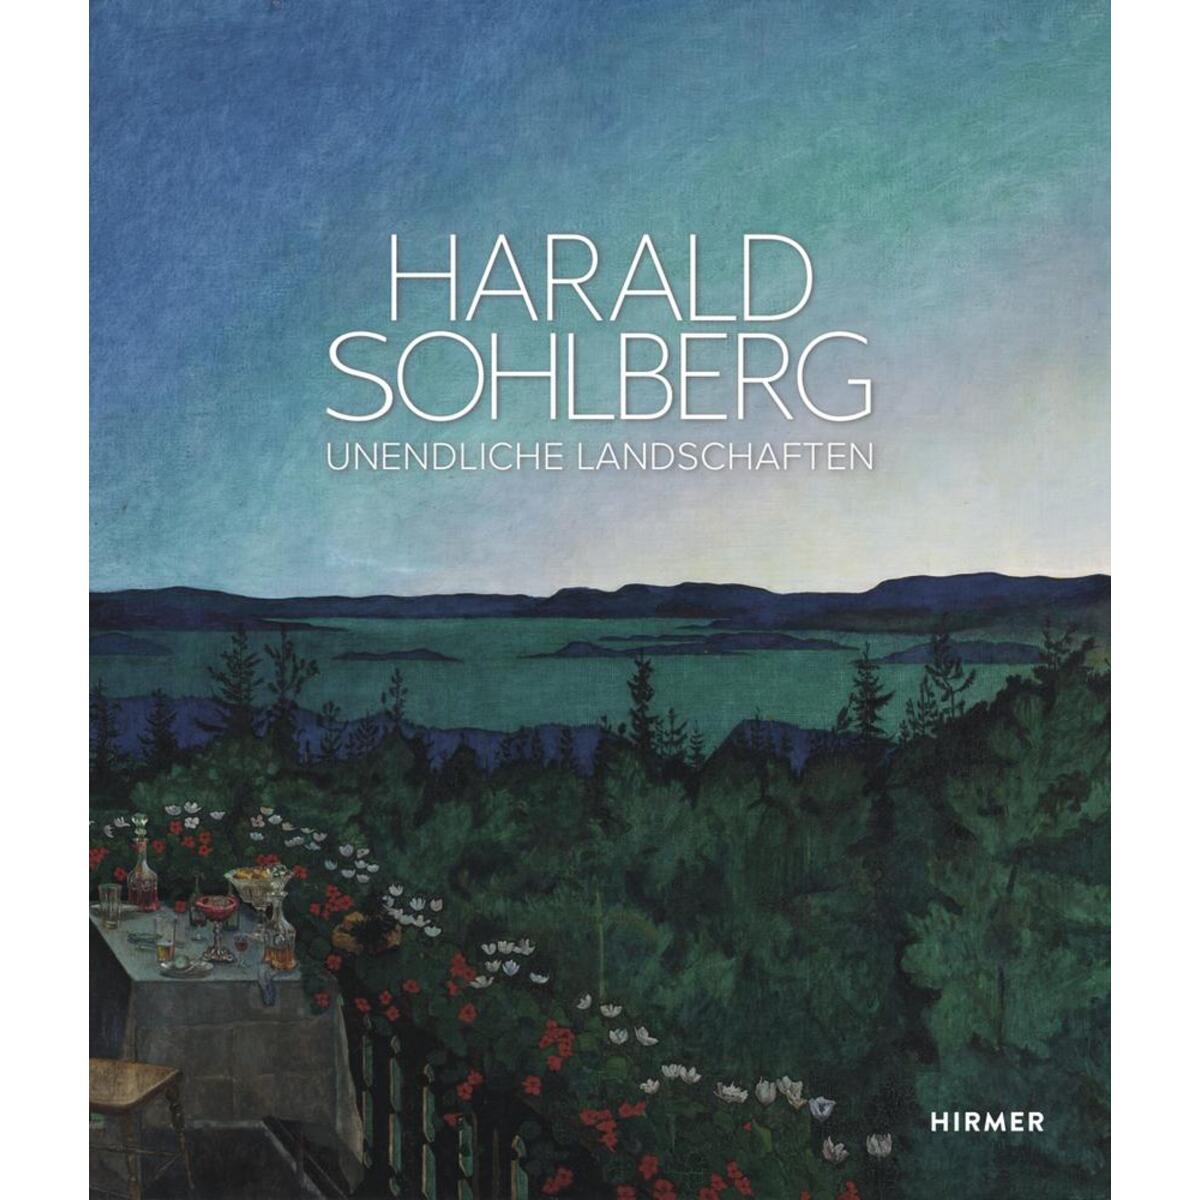 Harald Sohlberg von Hirmer Verlag GmbH